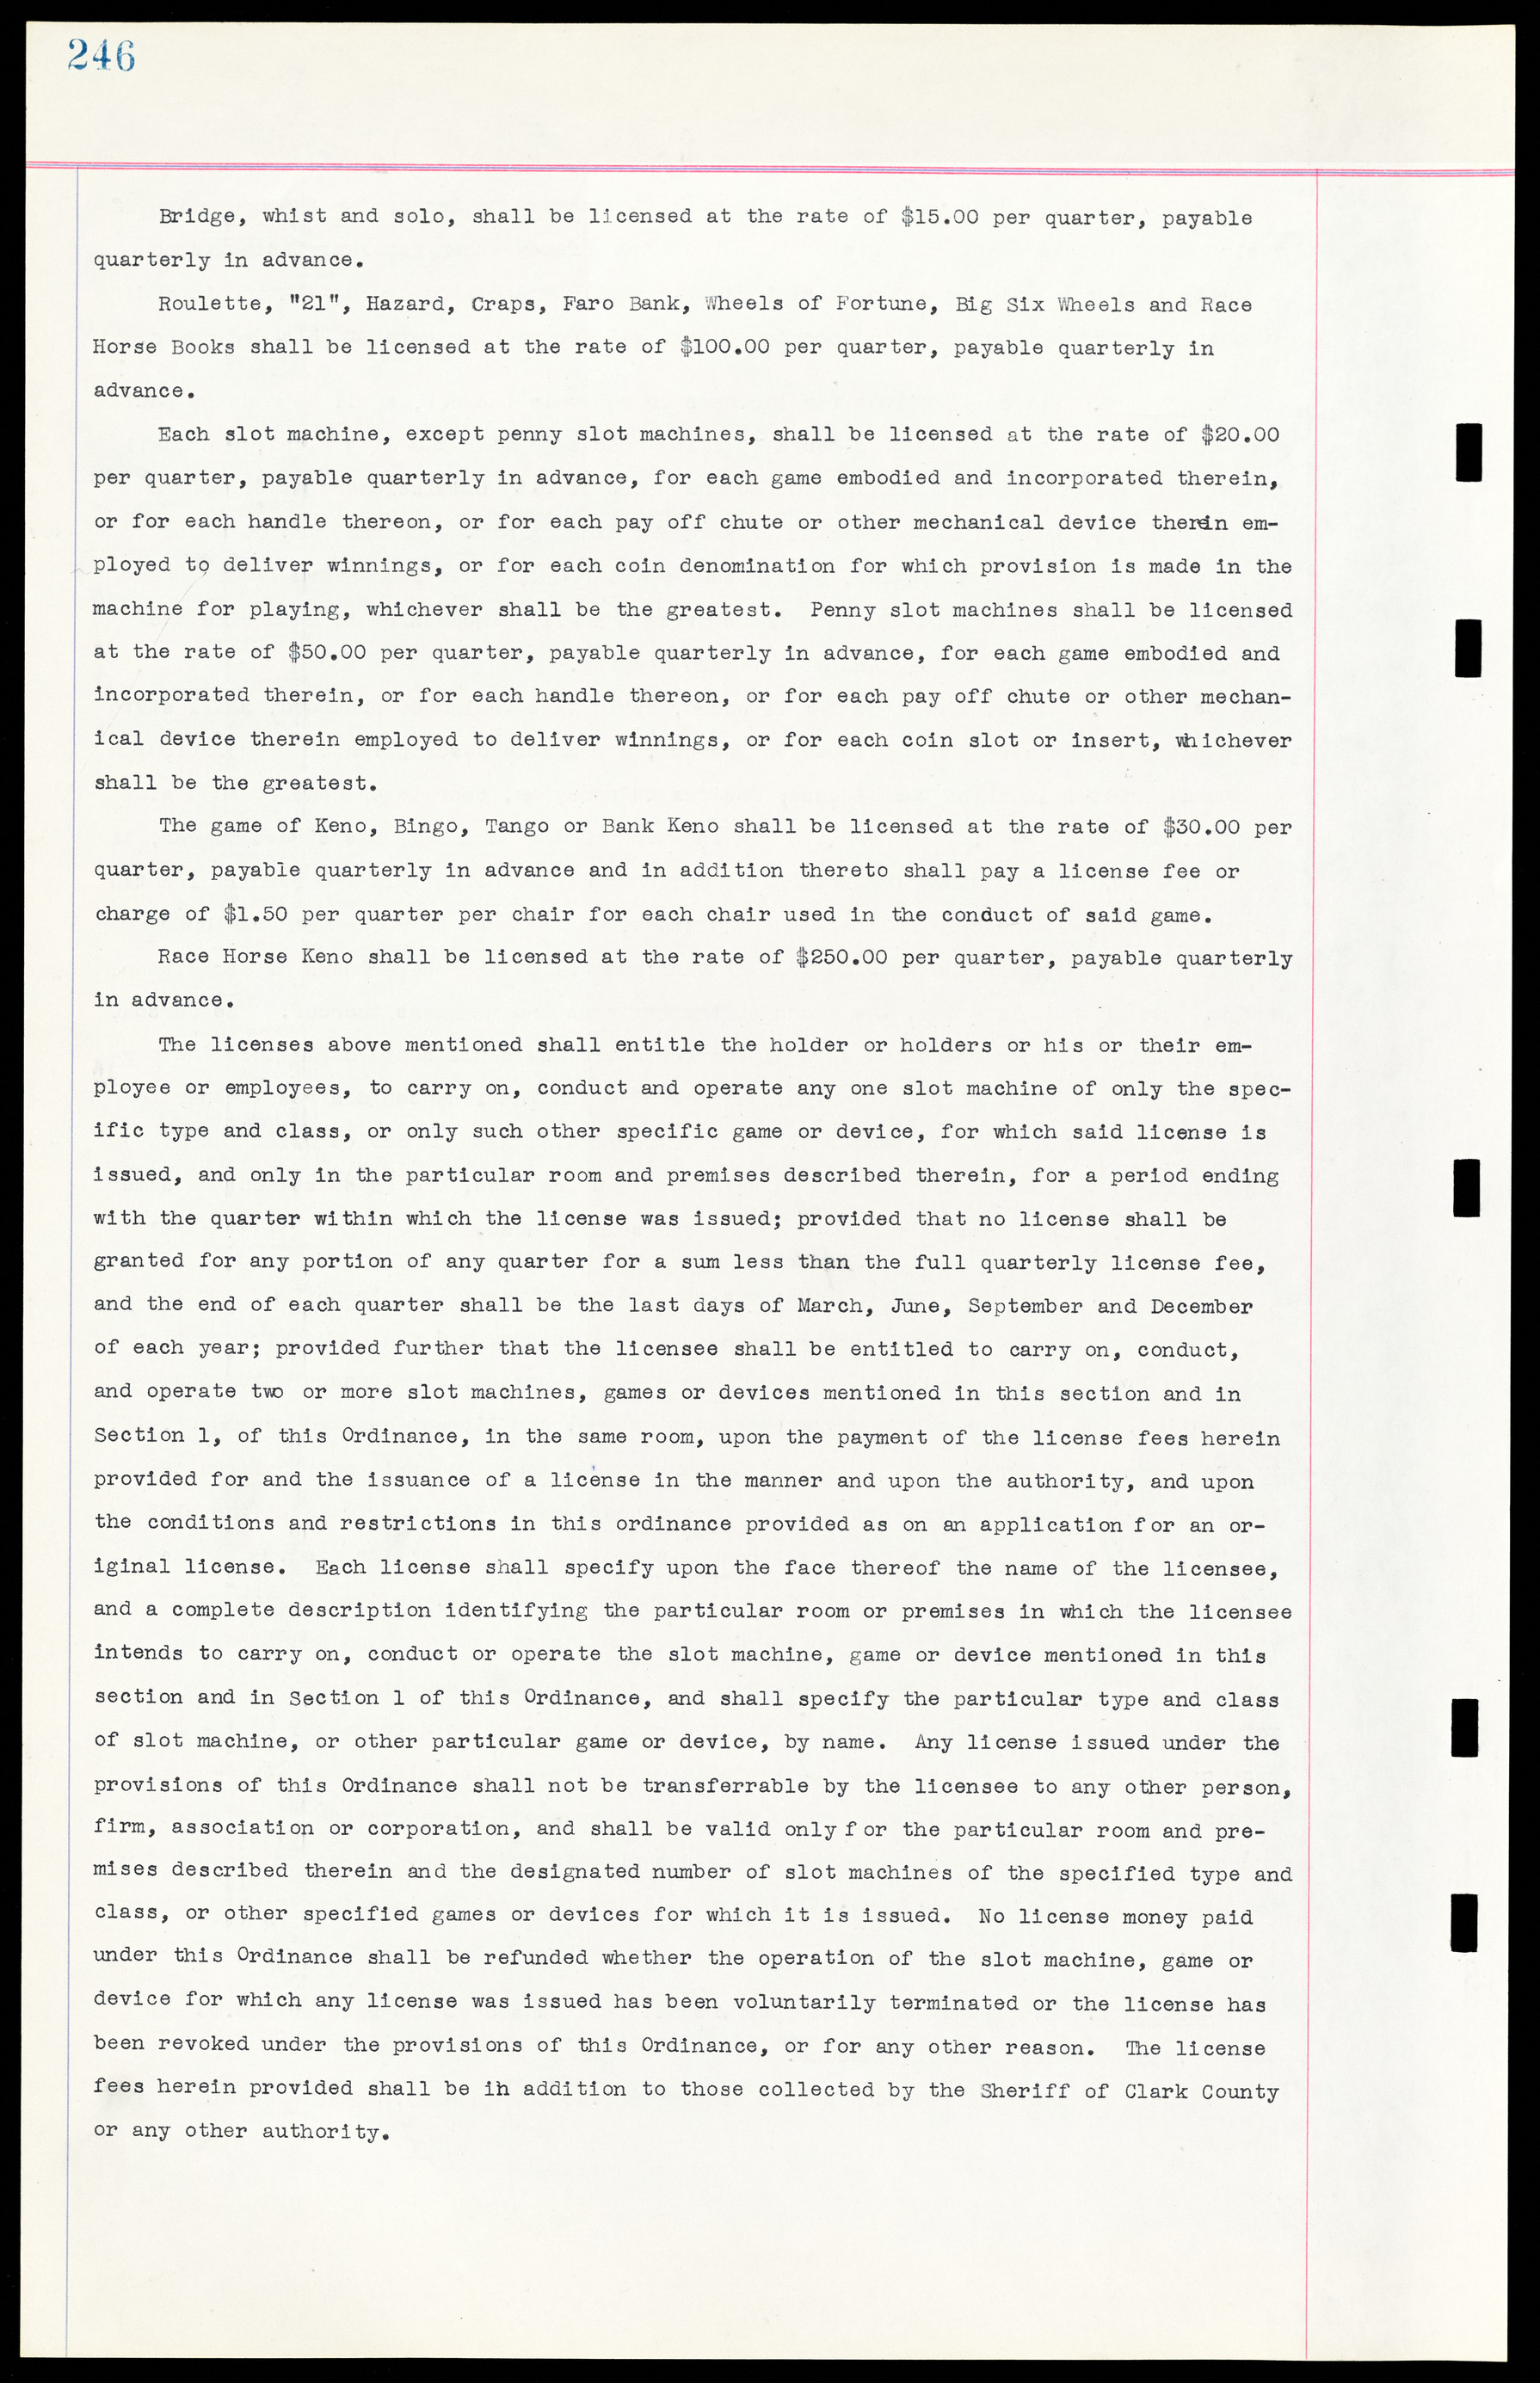 Las Vegas City Ordinances, March 31, 1933 to October 25, 1950, lvc000014-275